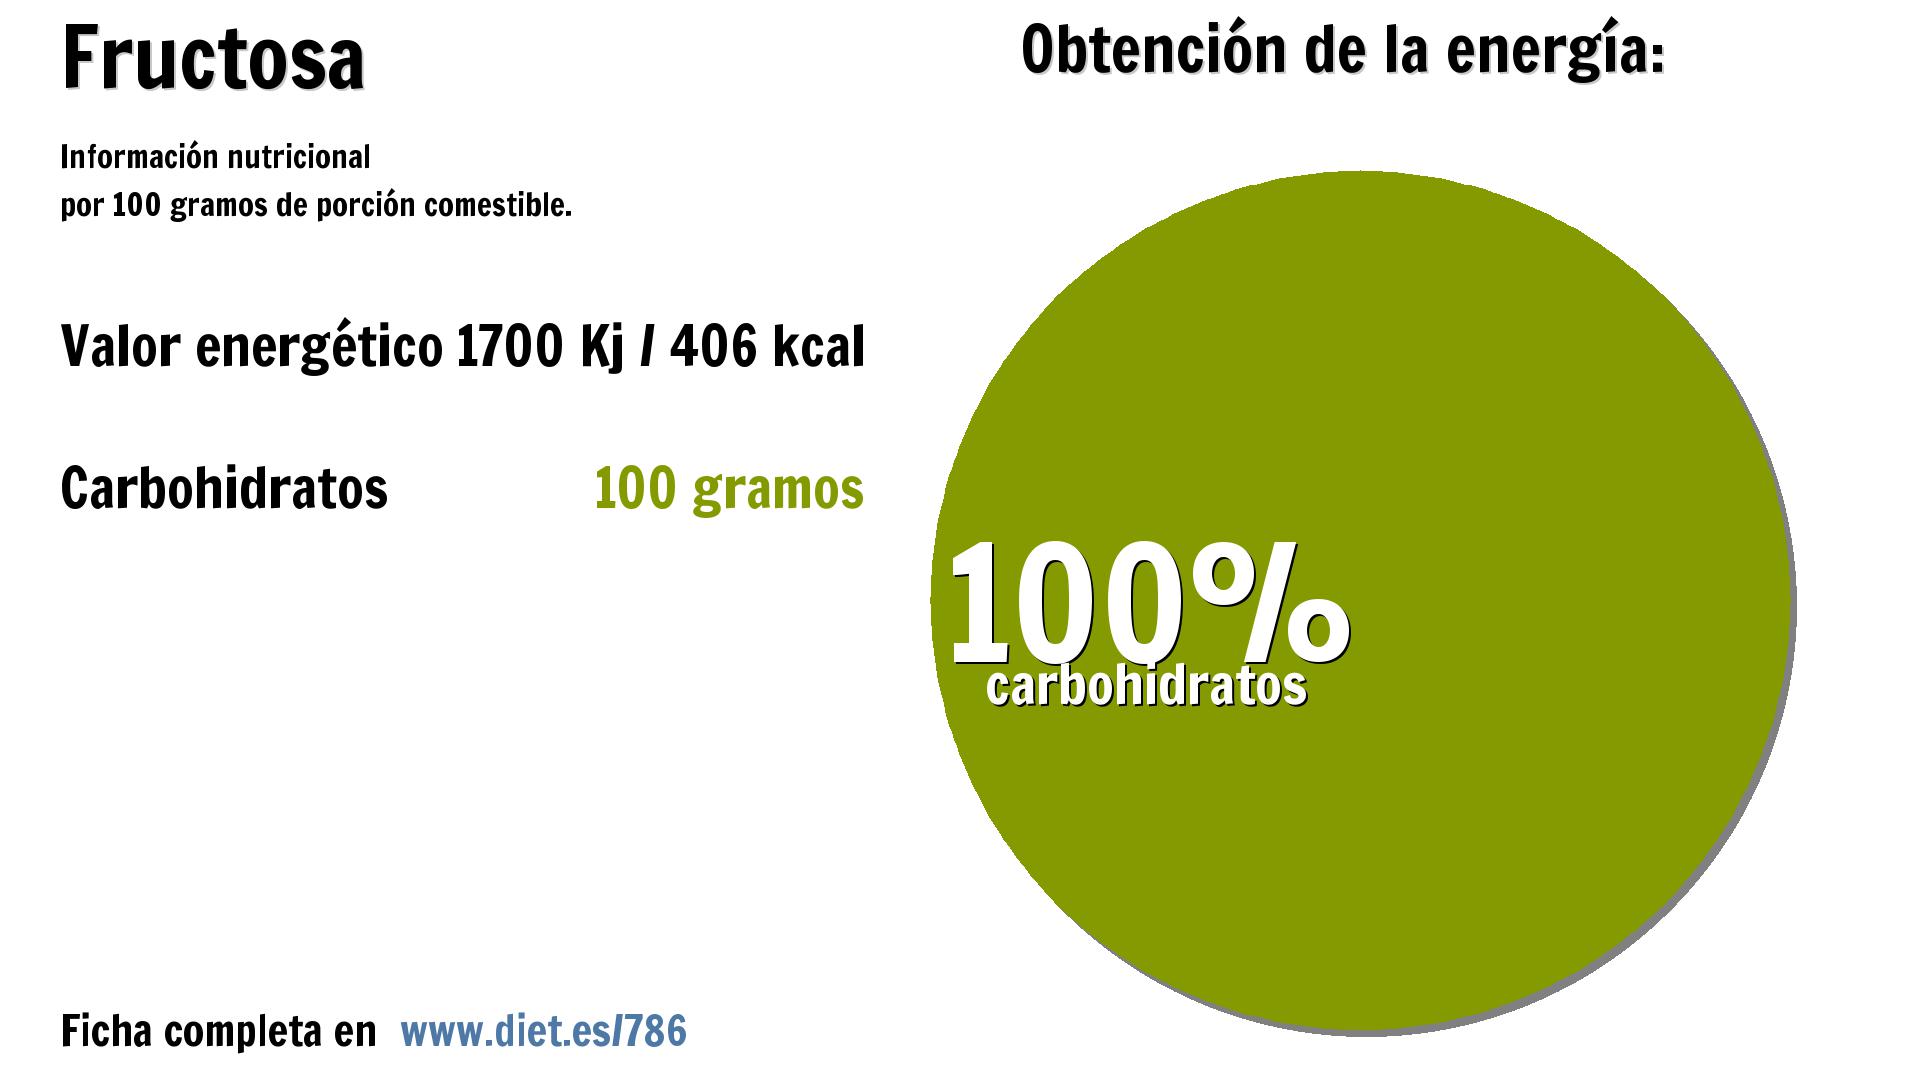 Fructosa: energía 1700 Kj y carbohidratos 100 g.